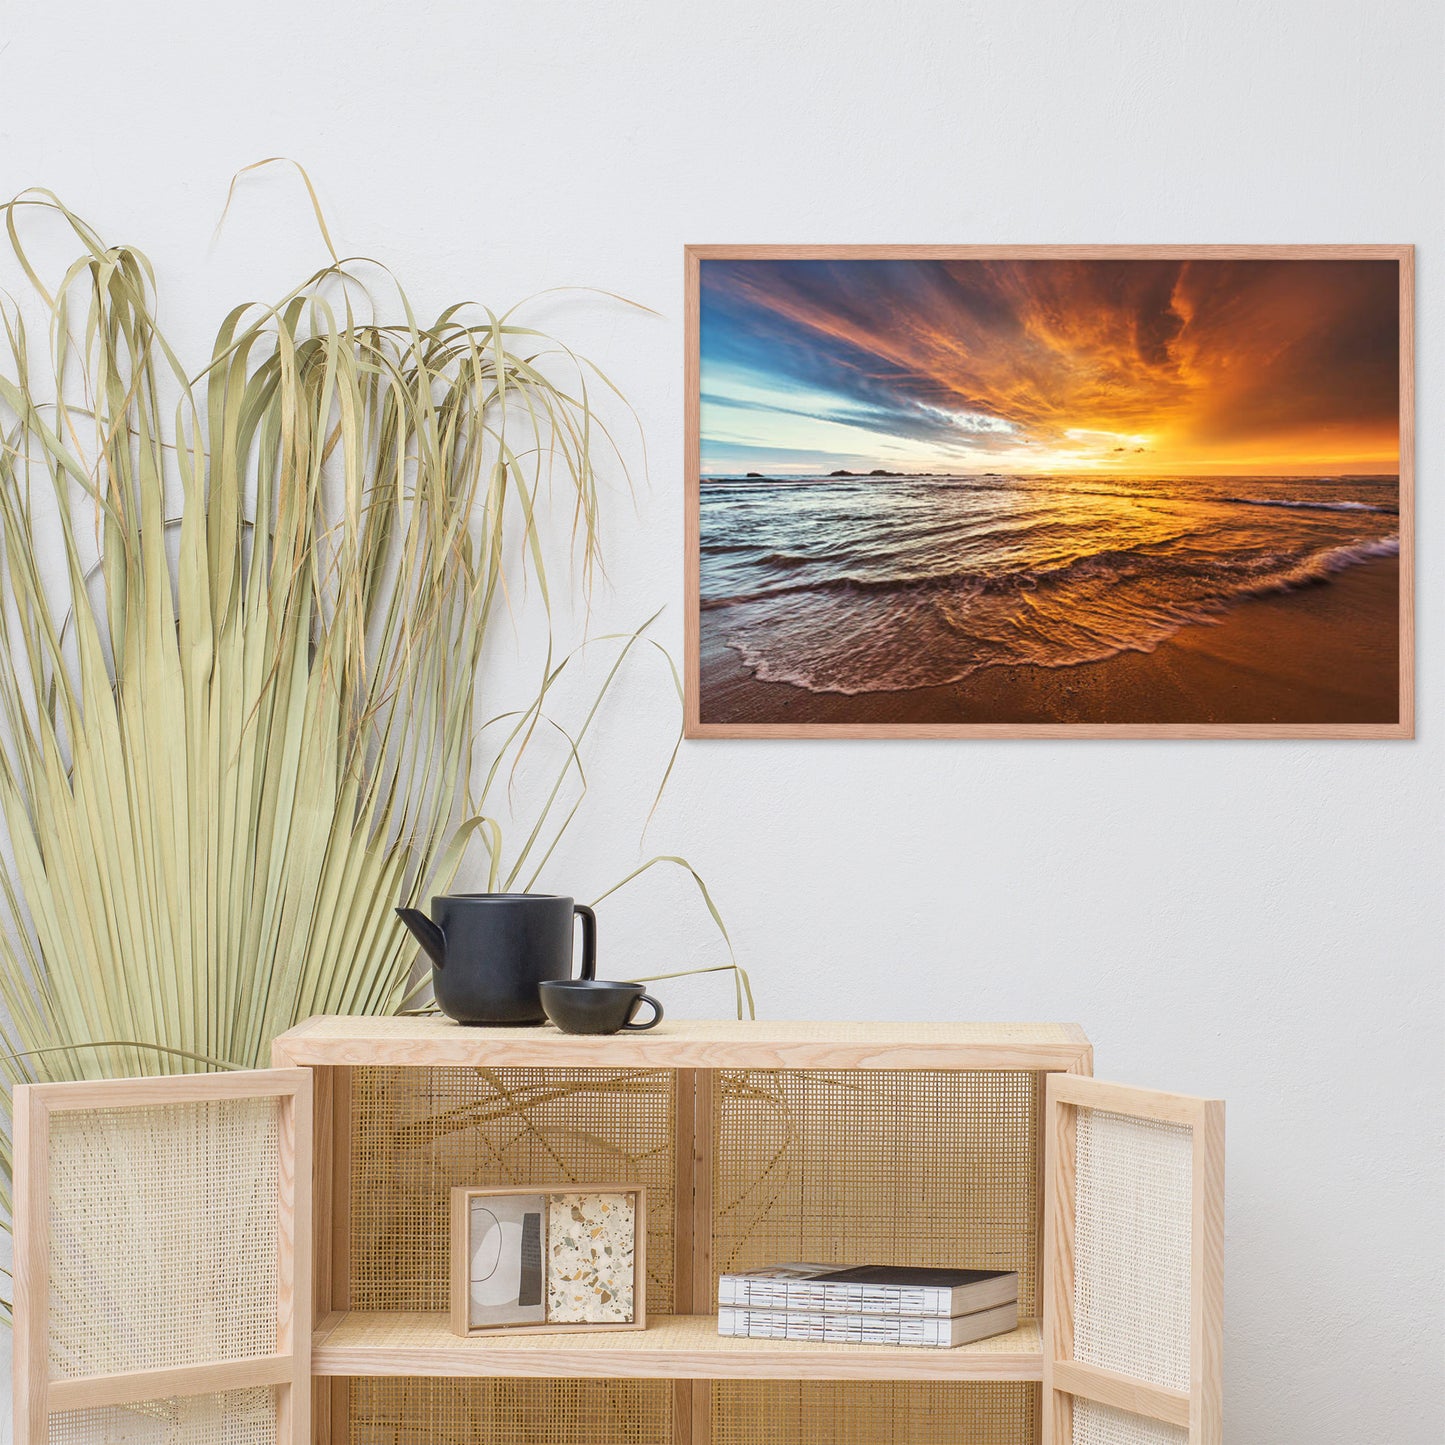 Tranquil Seascape Beach / Coastal Landscape Photograph Framed Wall Art Print